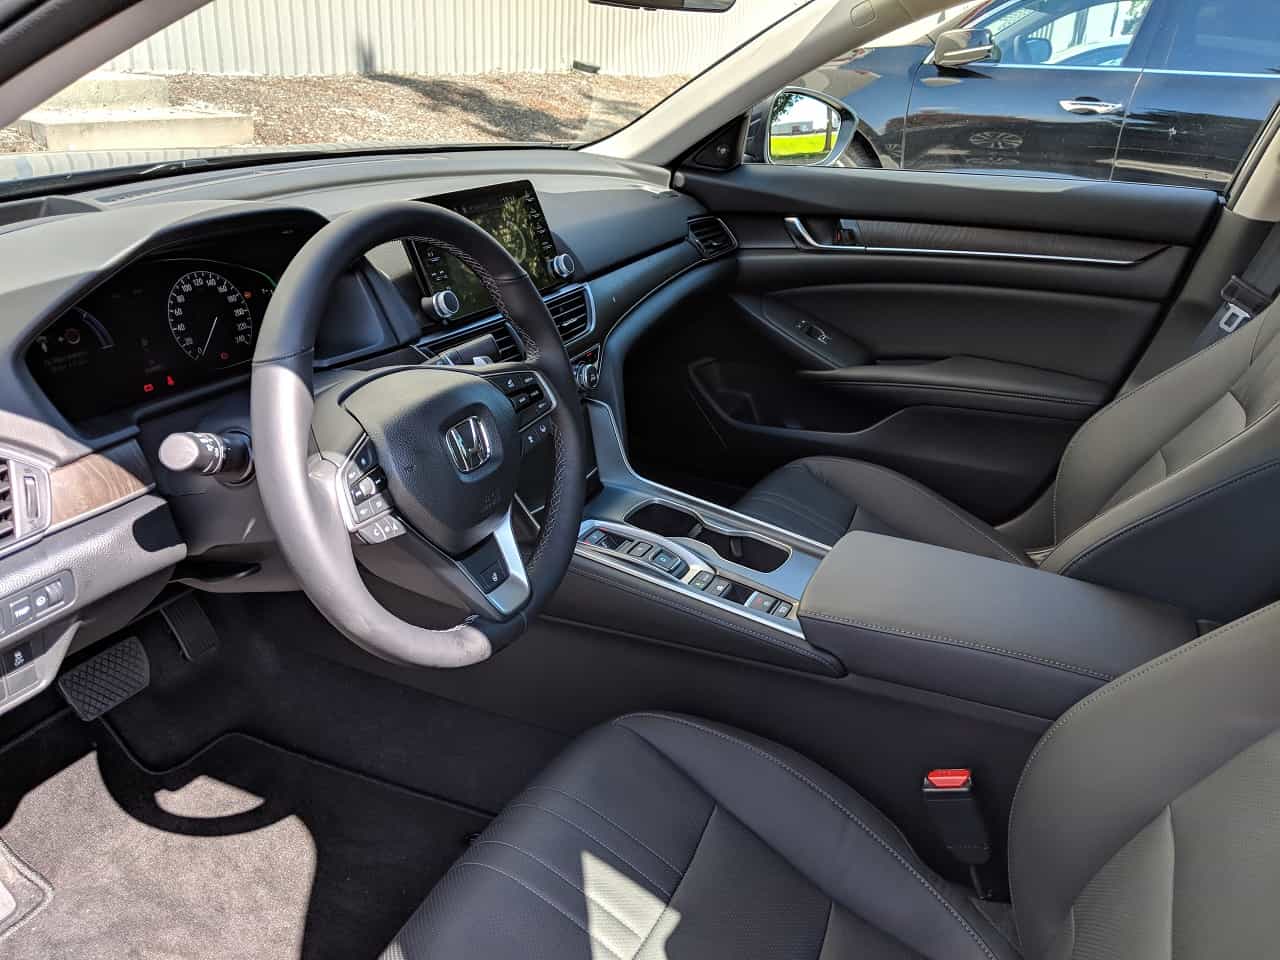 2018 Honda Accord Hybrid Review 11